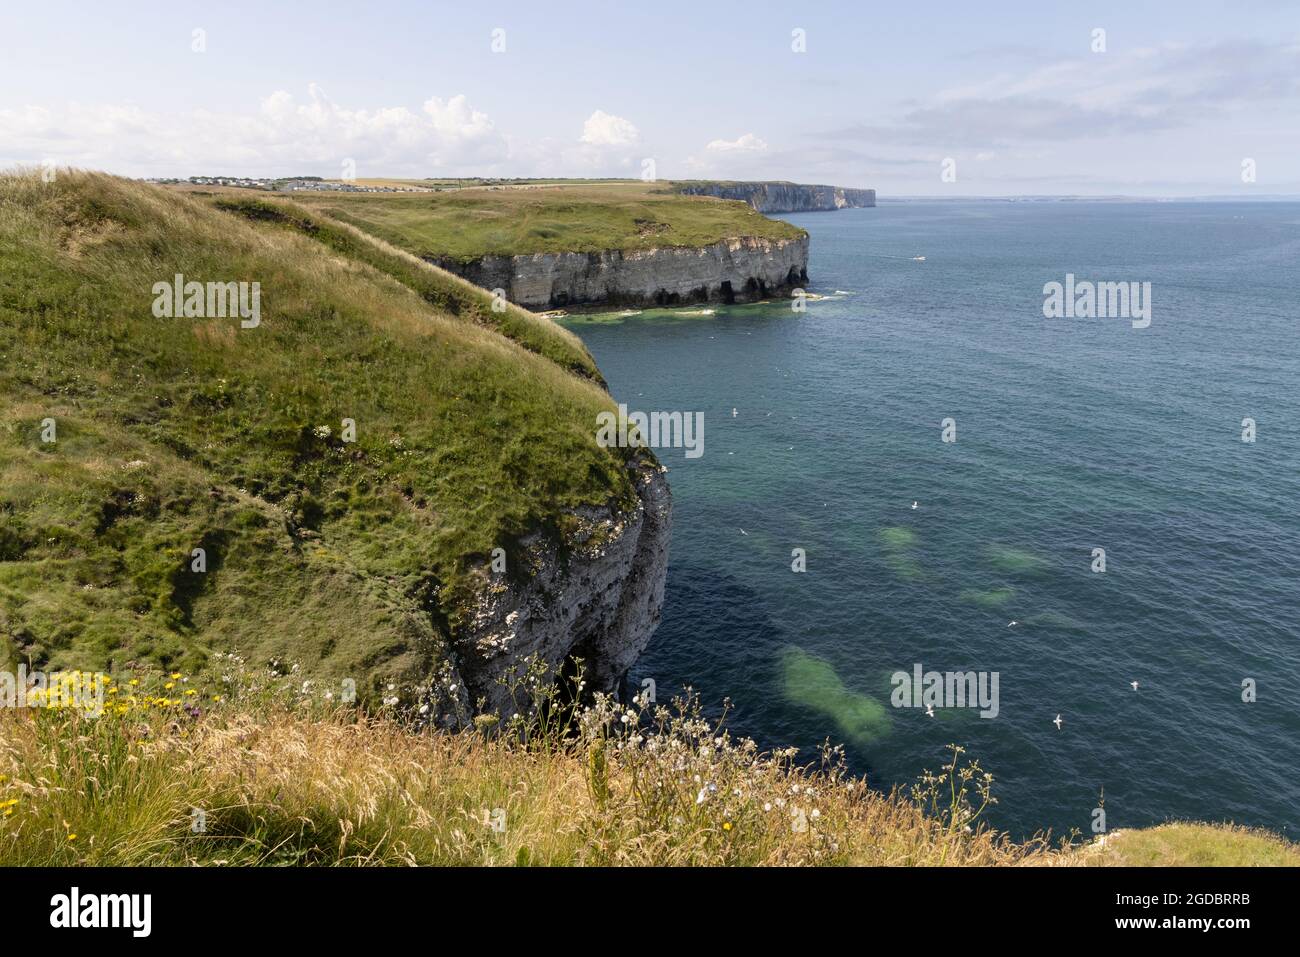 UK landscape - coastal landscape of sea cliffs at Flamborough Head, East Yorkshire UK Stock Photo